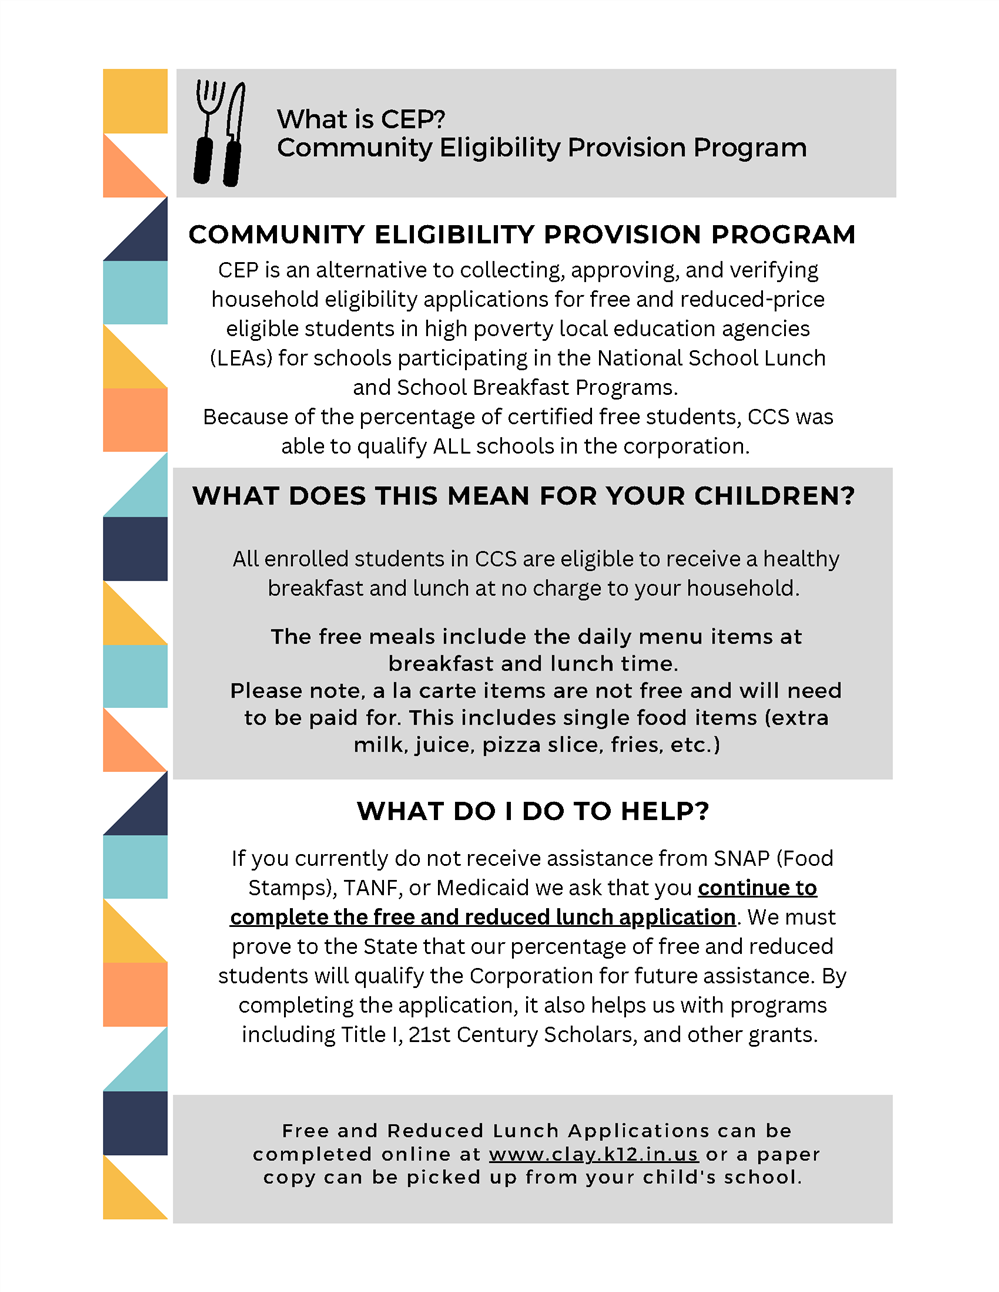 Community Eligibility Provision Program